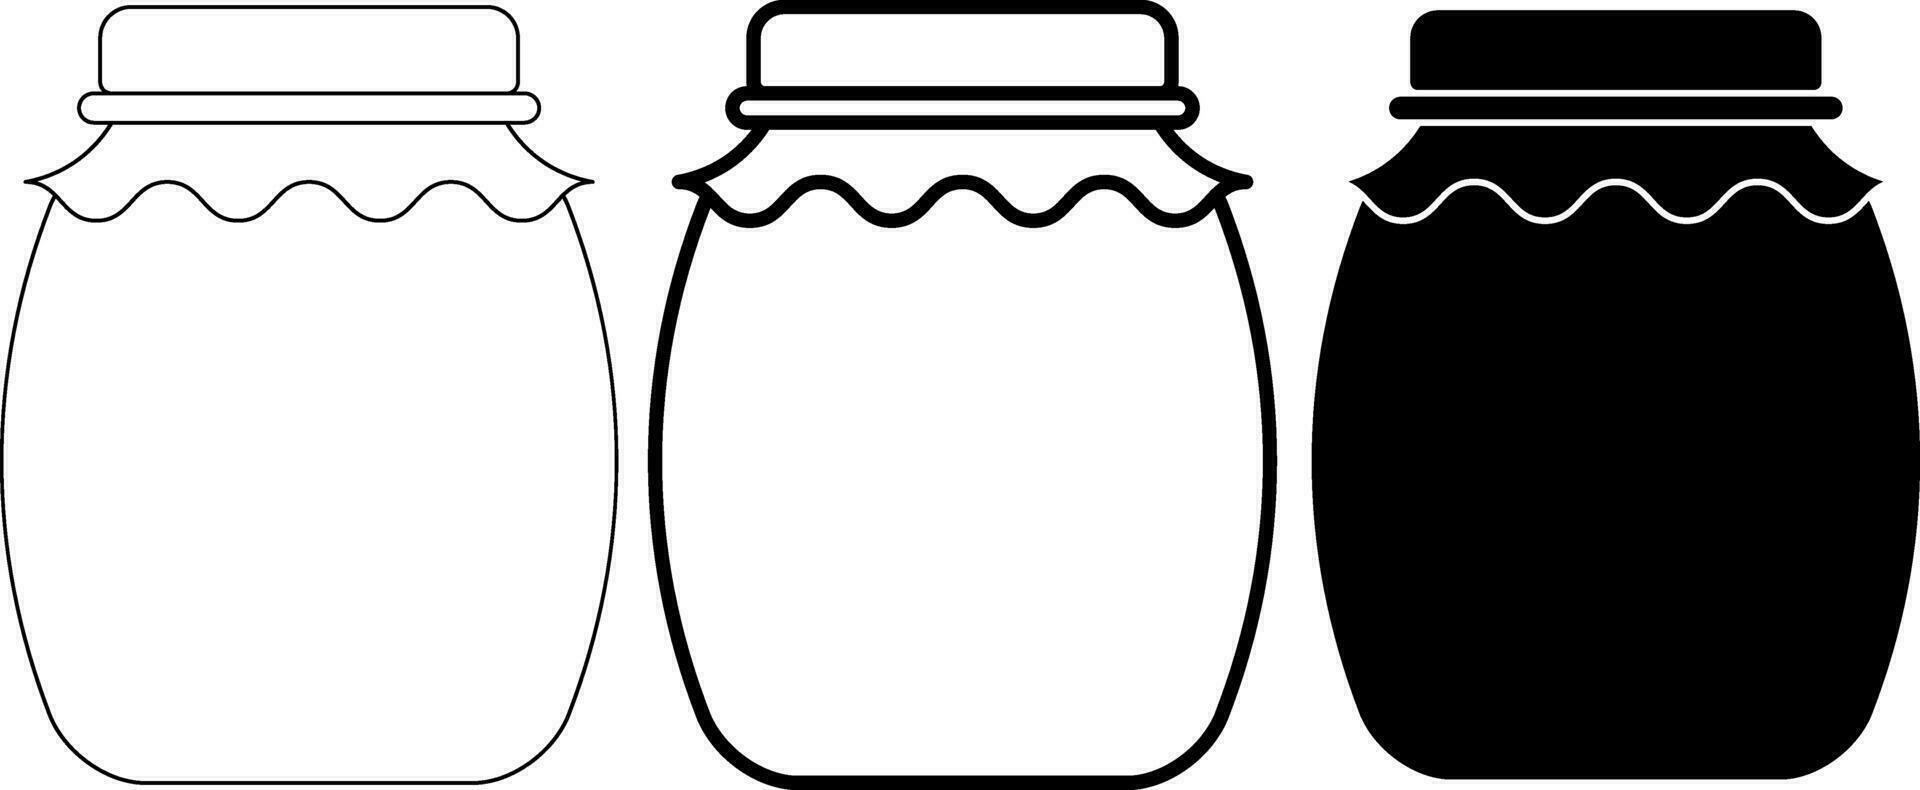 outline silhouette jar icon set vector